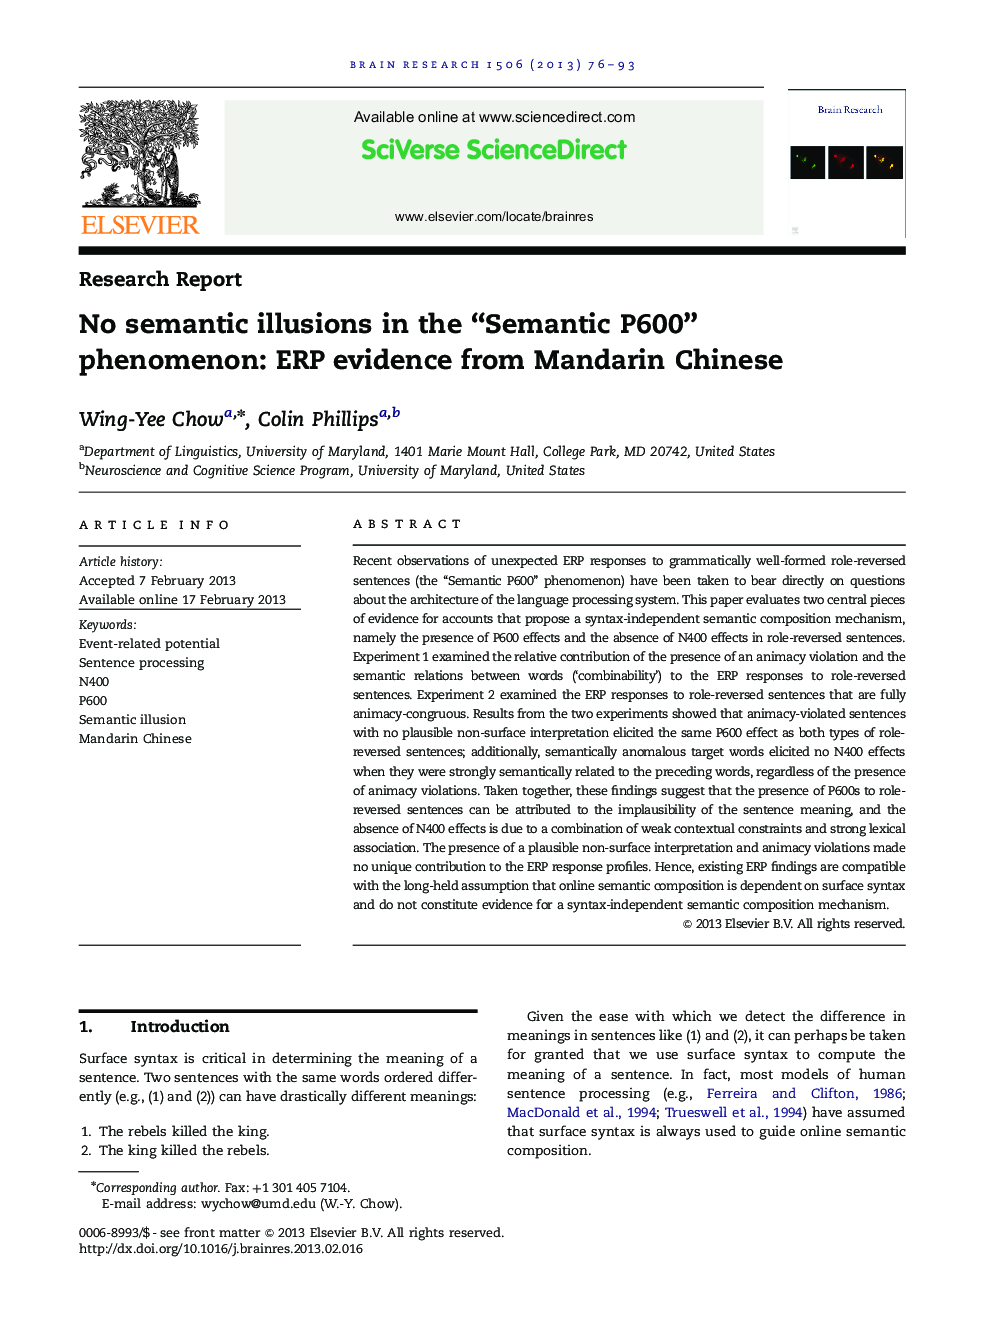 Research ReportNo semantic illusions in the “Semantic P600” phenomenon: ERP evidence from Mandarin Chinese